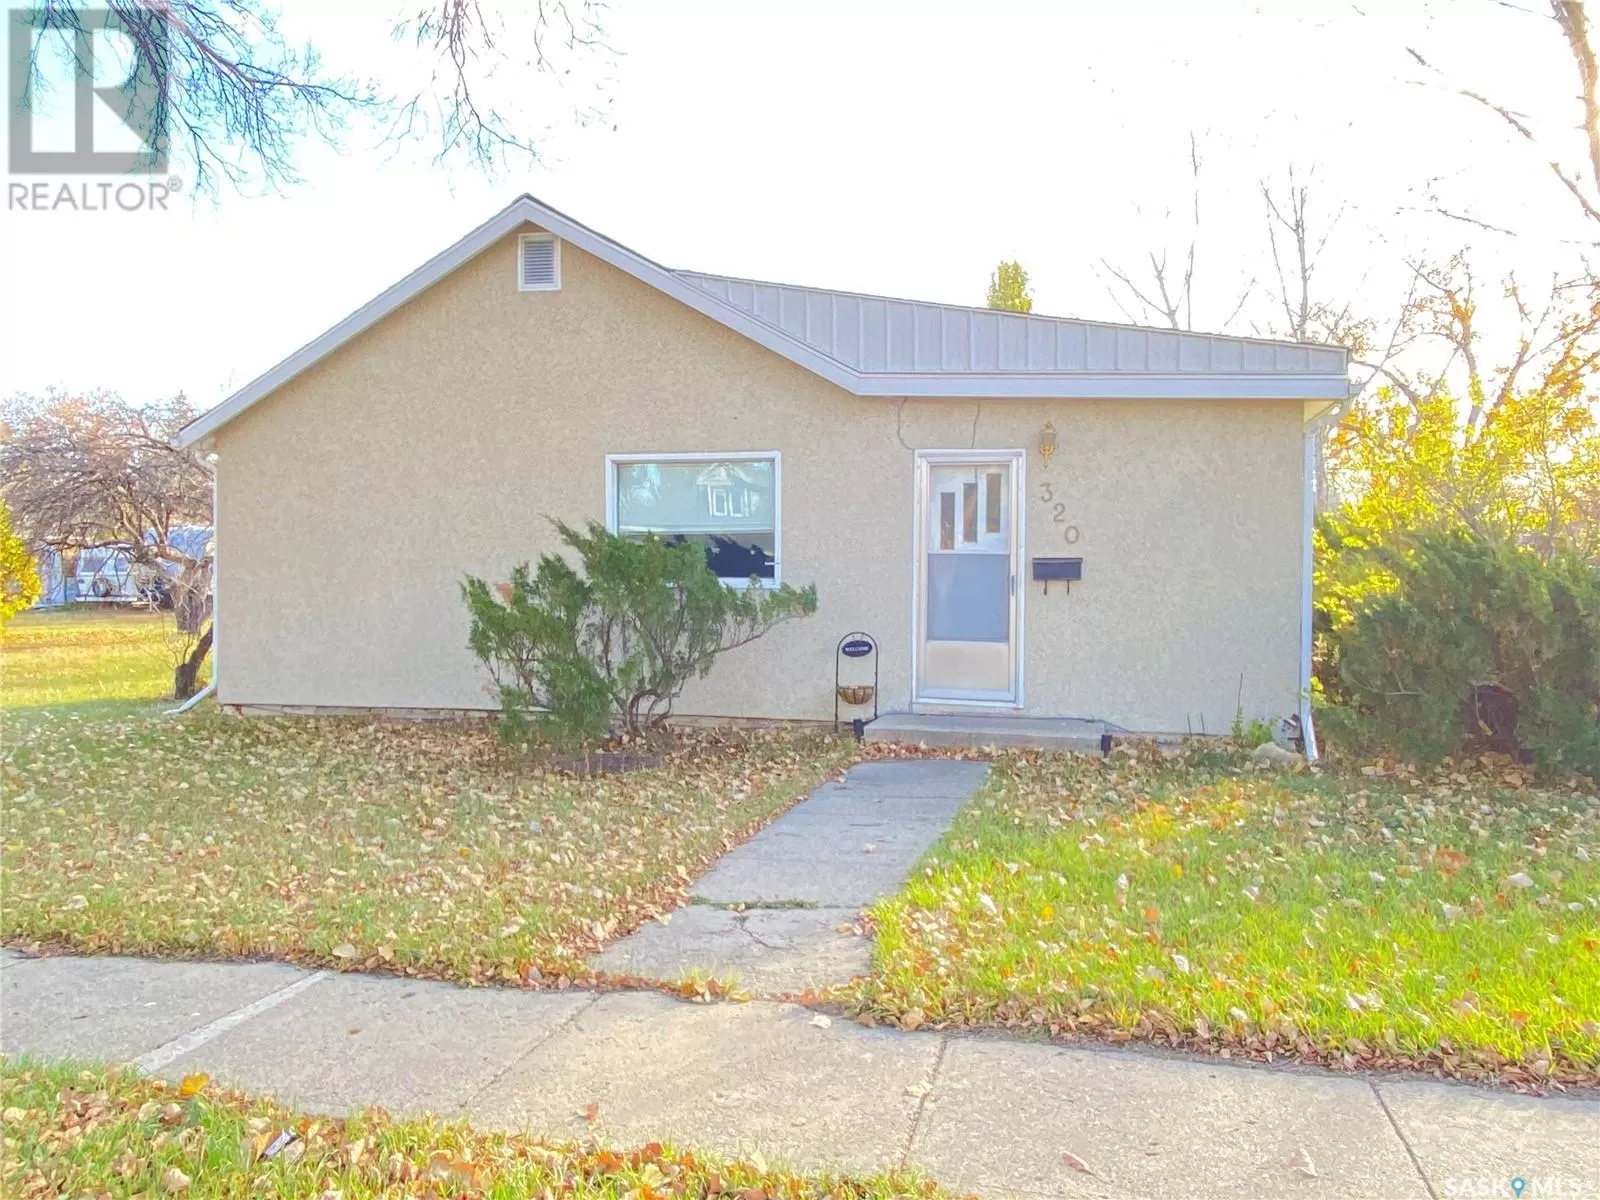 House for rent: 320 Aspen Street, Maple Creek, Saskatchewan S0N 1N0